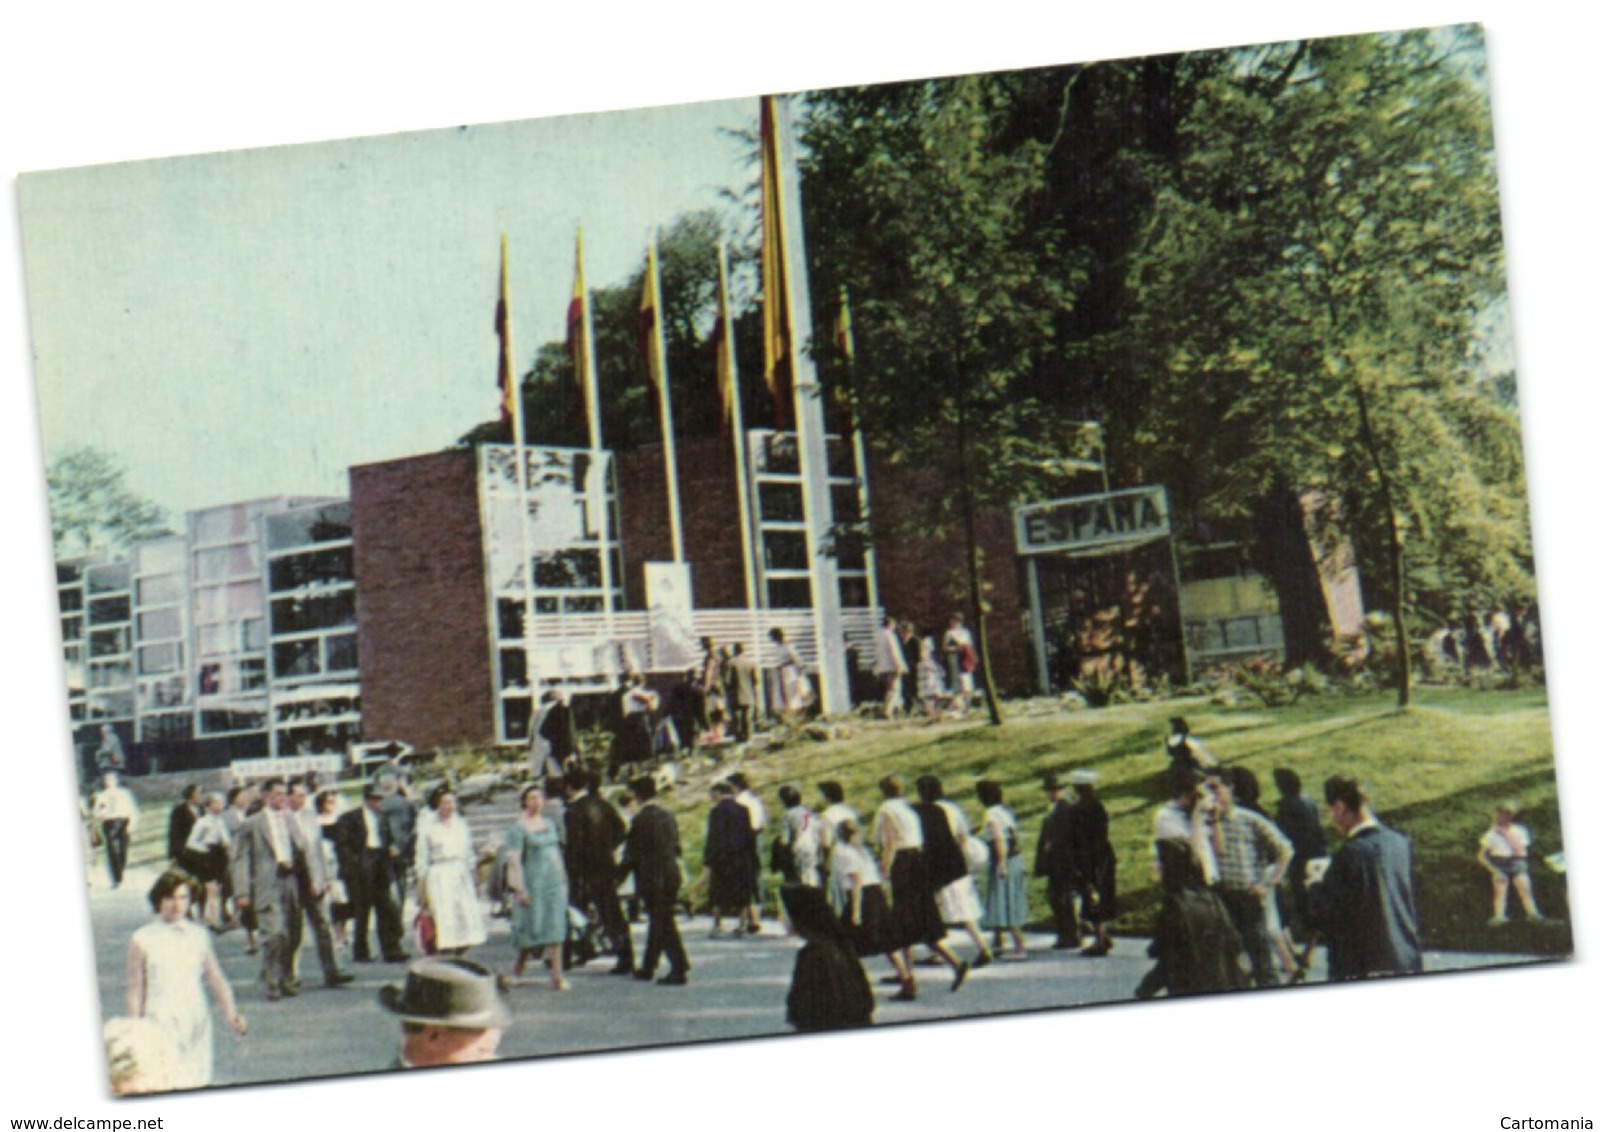 Exposicion Universal E Internacional De Bruselas 1958 - Vista Exterior Del Papellon Espanol - Universal Exhibitions